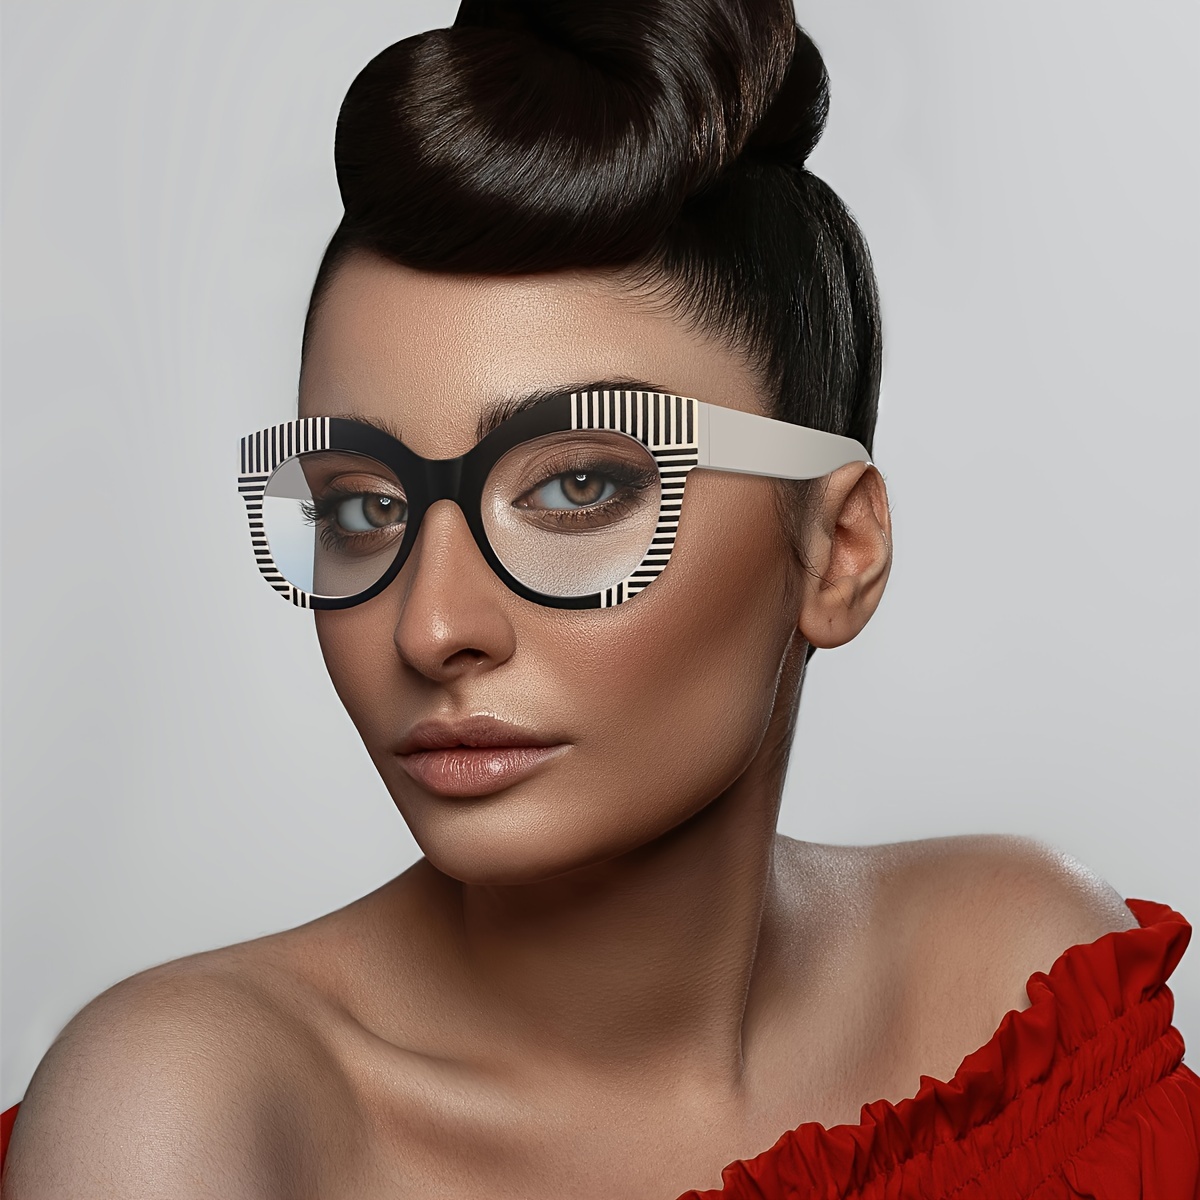 

Cat Eye Clear Lens Glasses Mod Color Block Fashion Decorative Glasses Party Favors Spectacles For Women